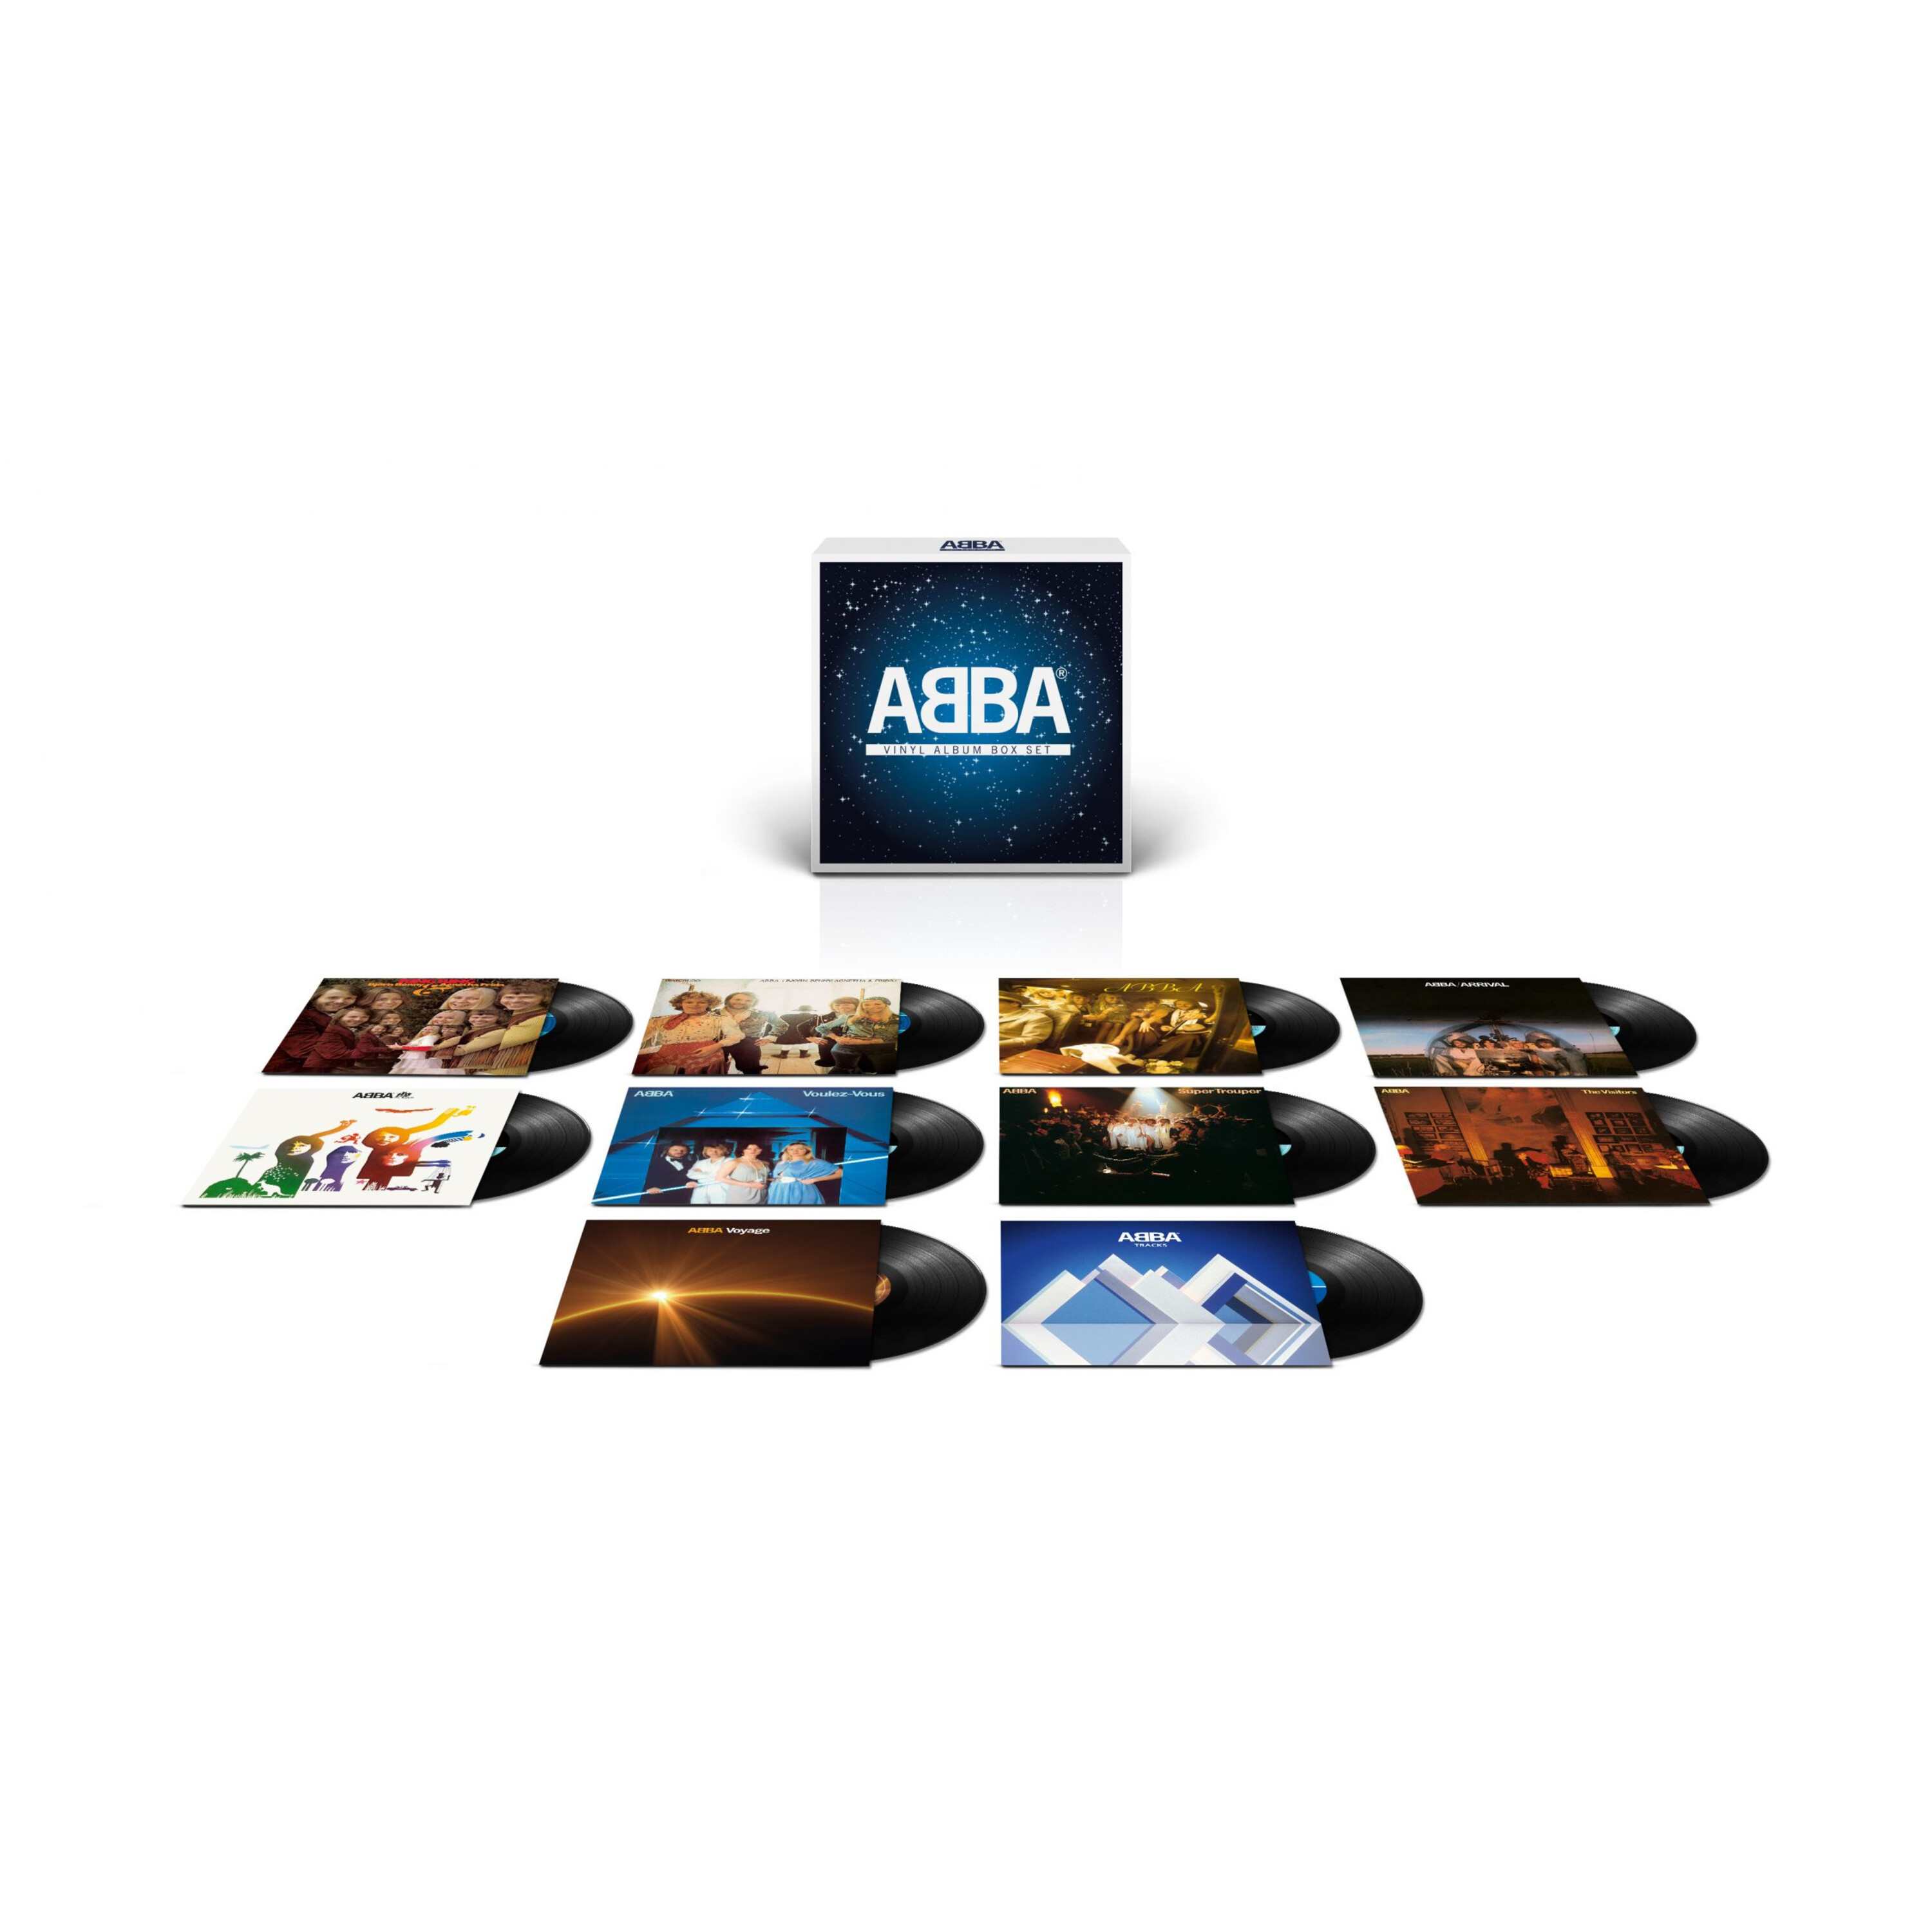 ABBA - ABBA - Vinyl Album Boxset (10LP Boxset + Tragetasche)